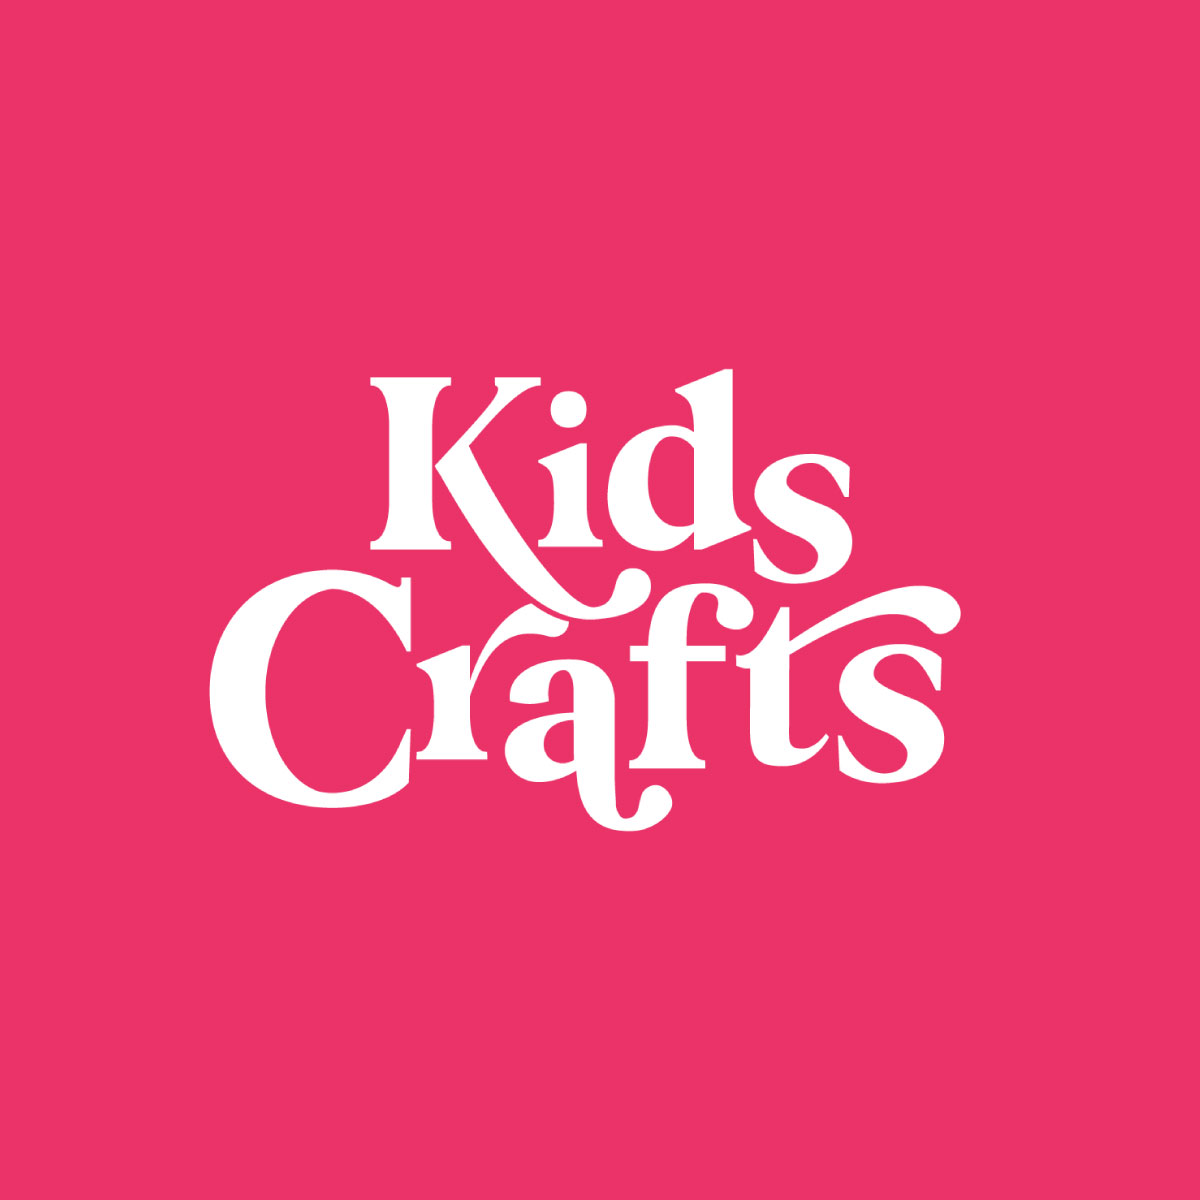 Kids Crafts